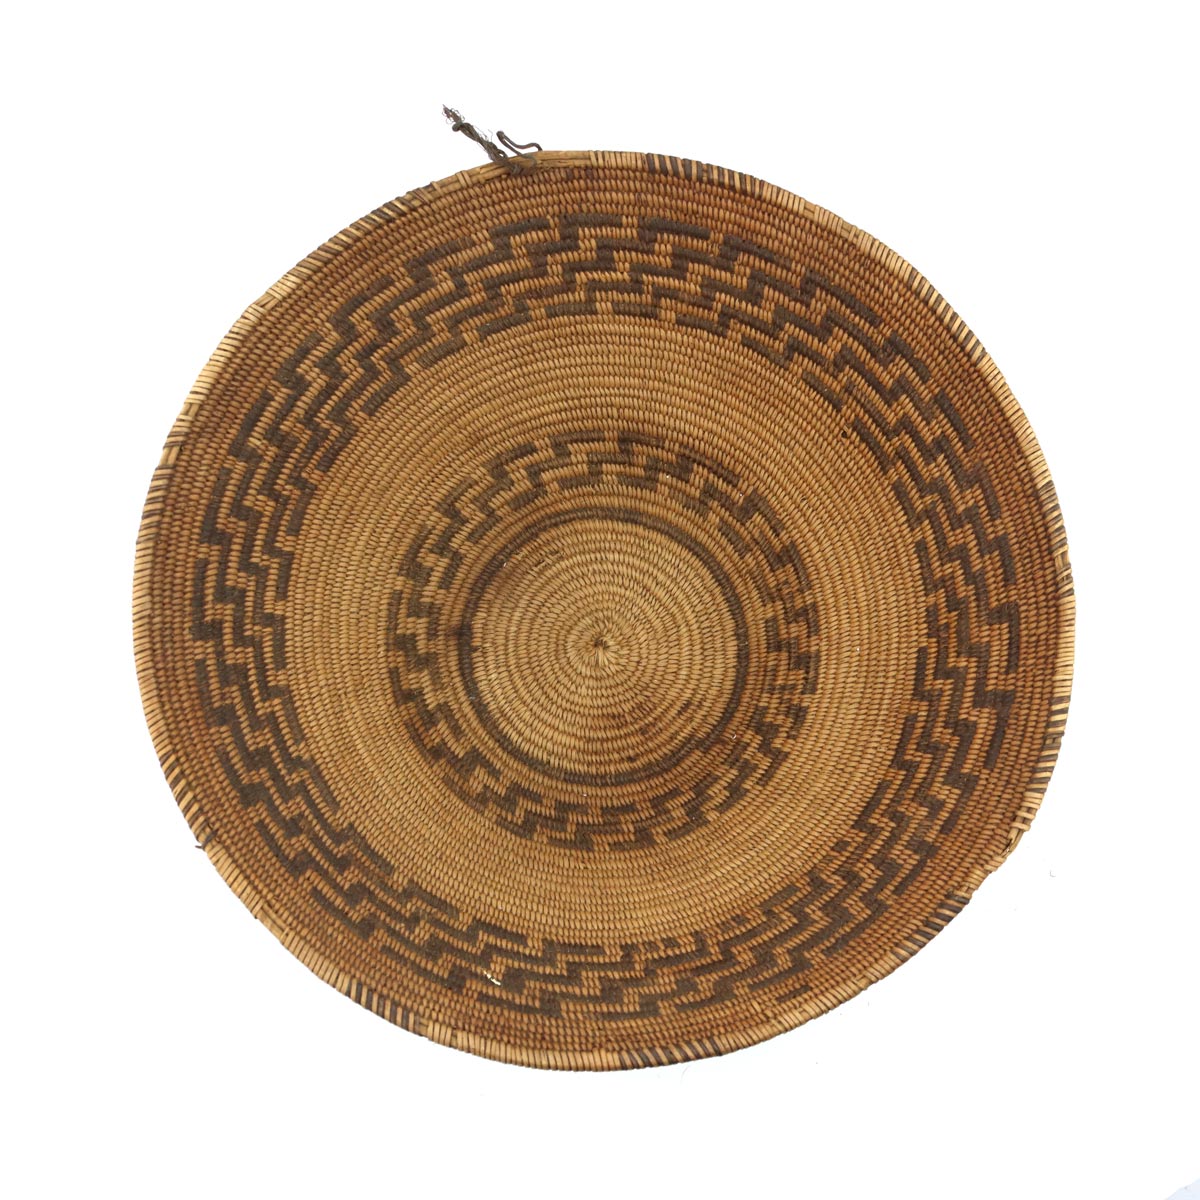 Panamint/Shoshone Basket with Geometric Design c. 1890s, 4" x 11" (SK3207)5
